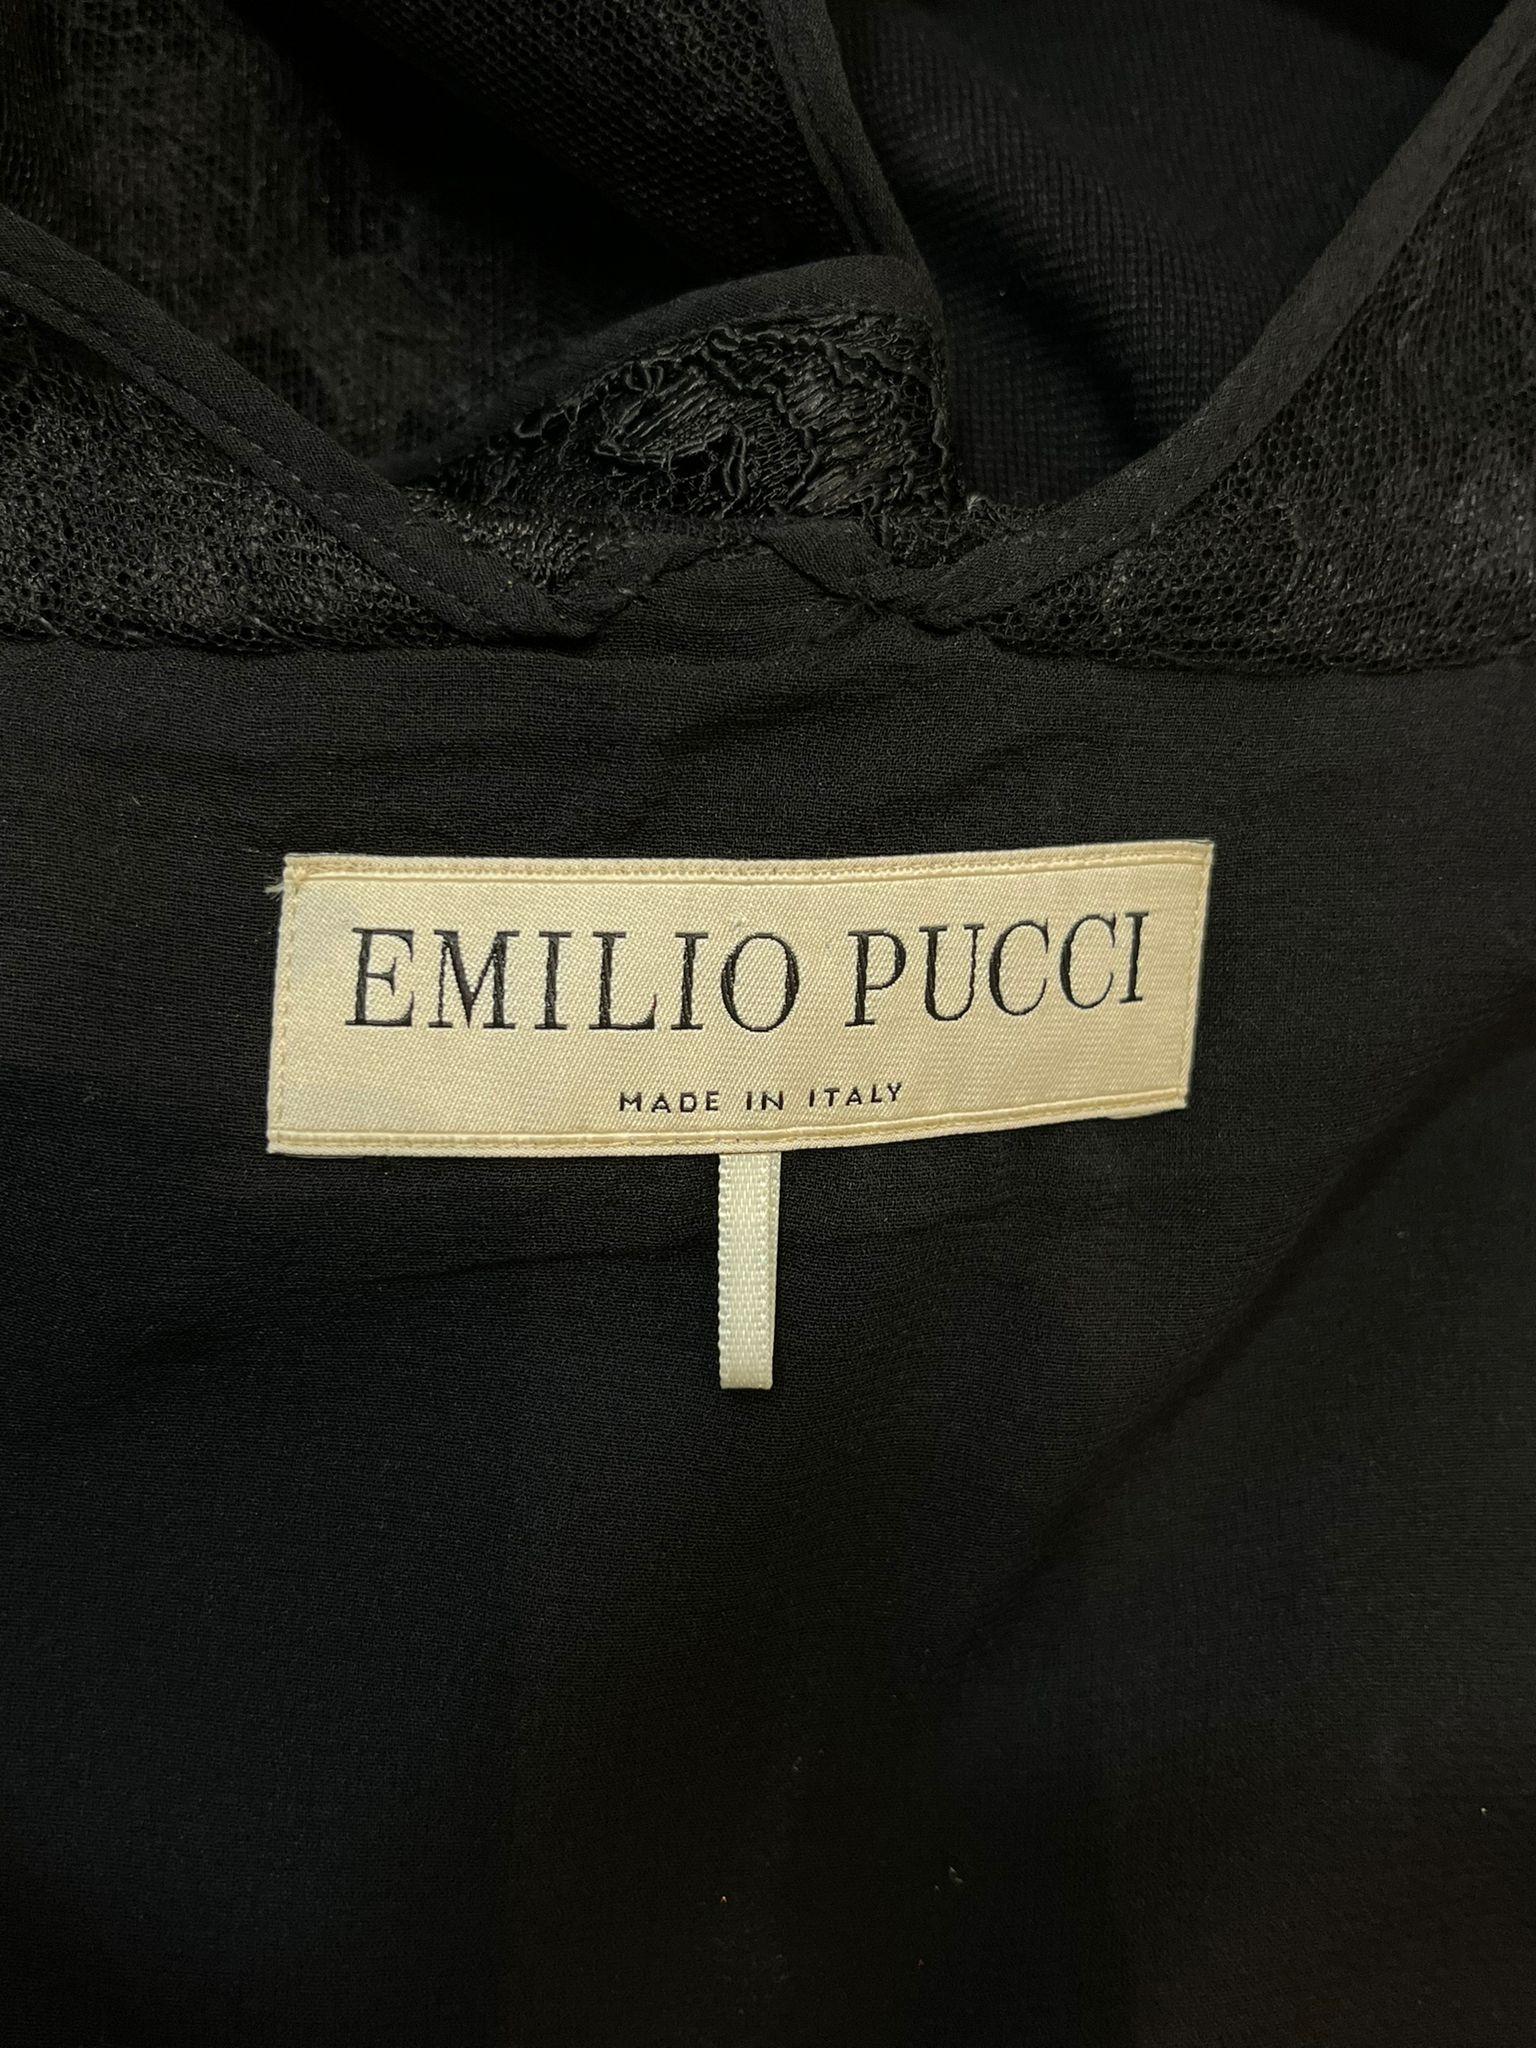 Emilio Pucci Lace Embellished Sheath Dress 2